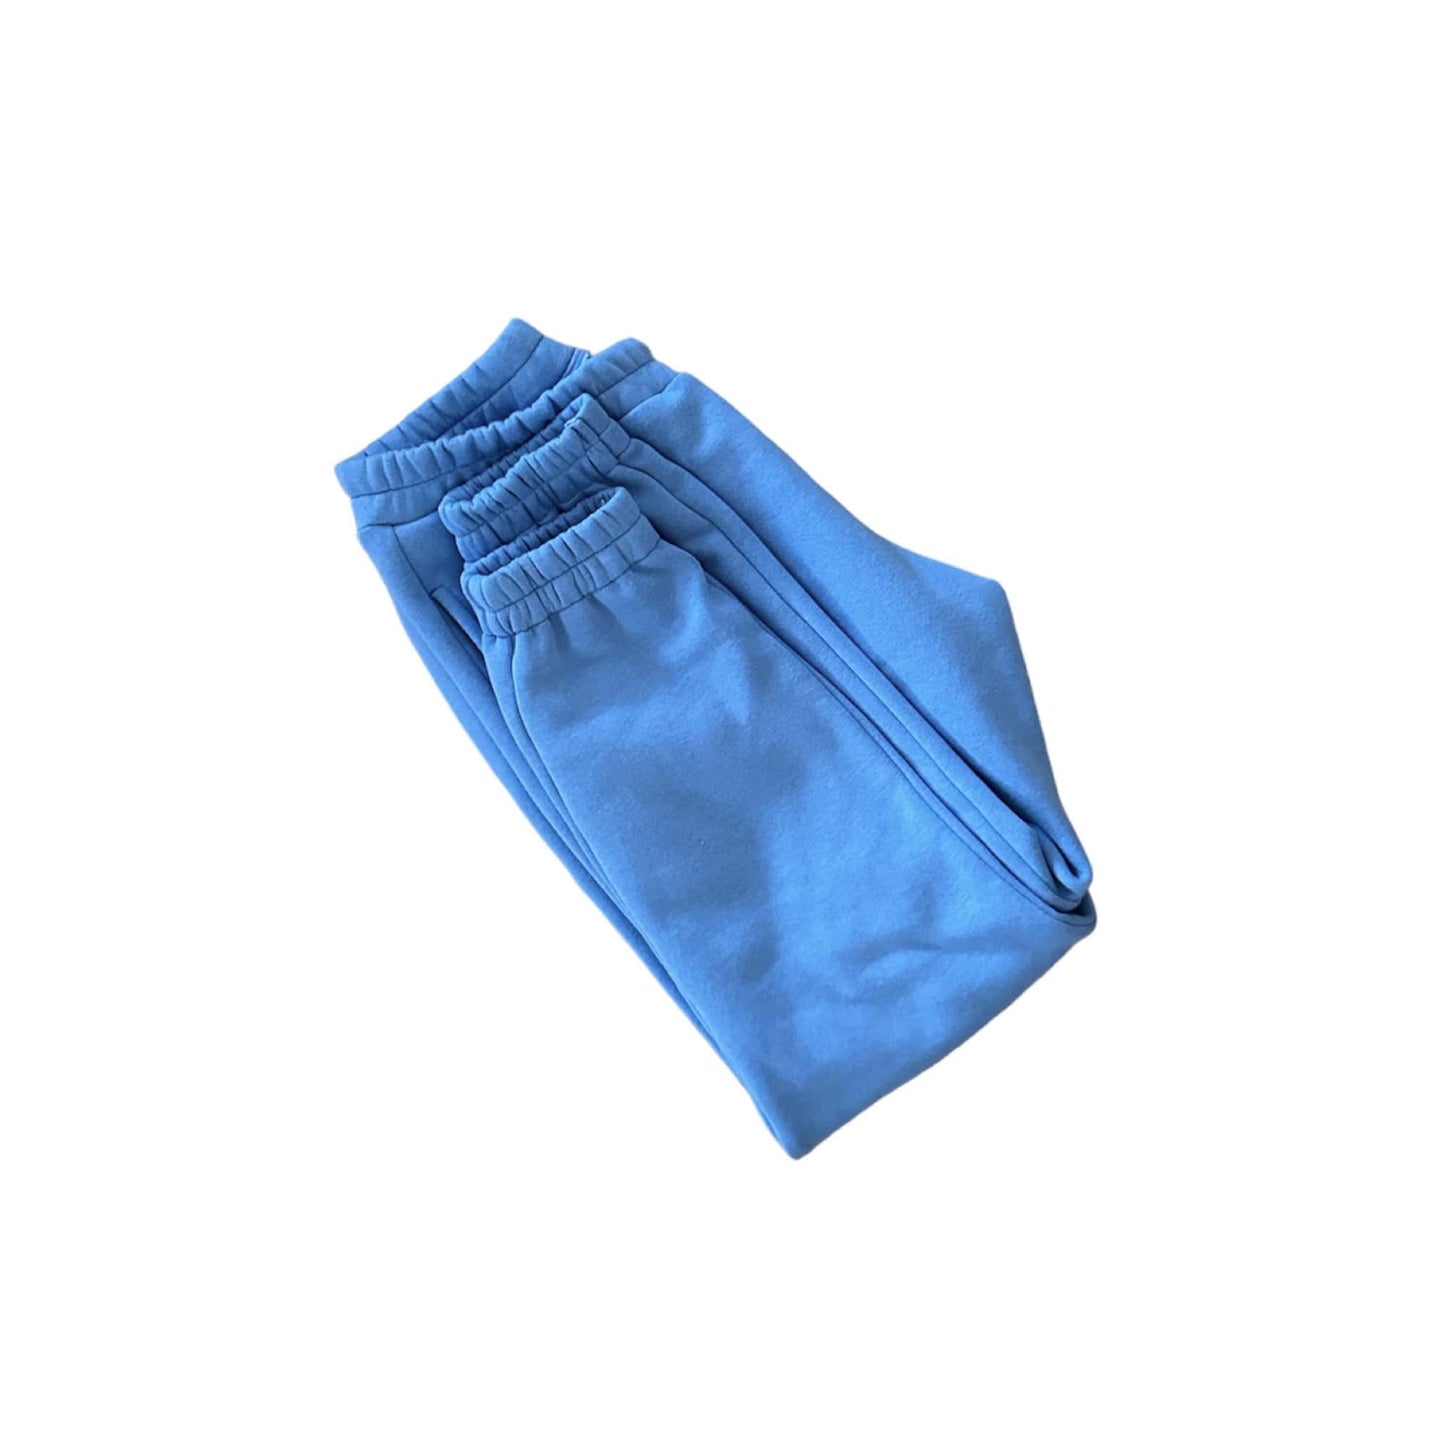 TheG Woman Pants // blue